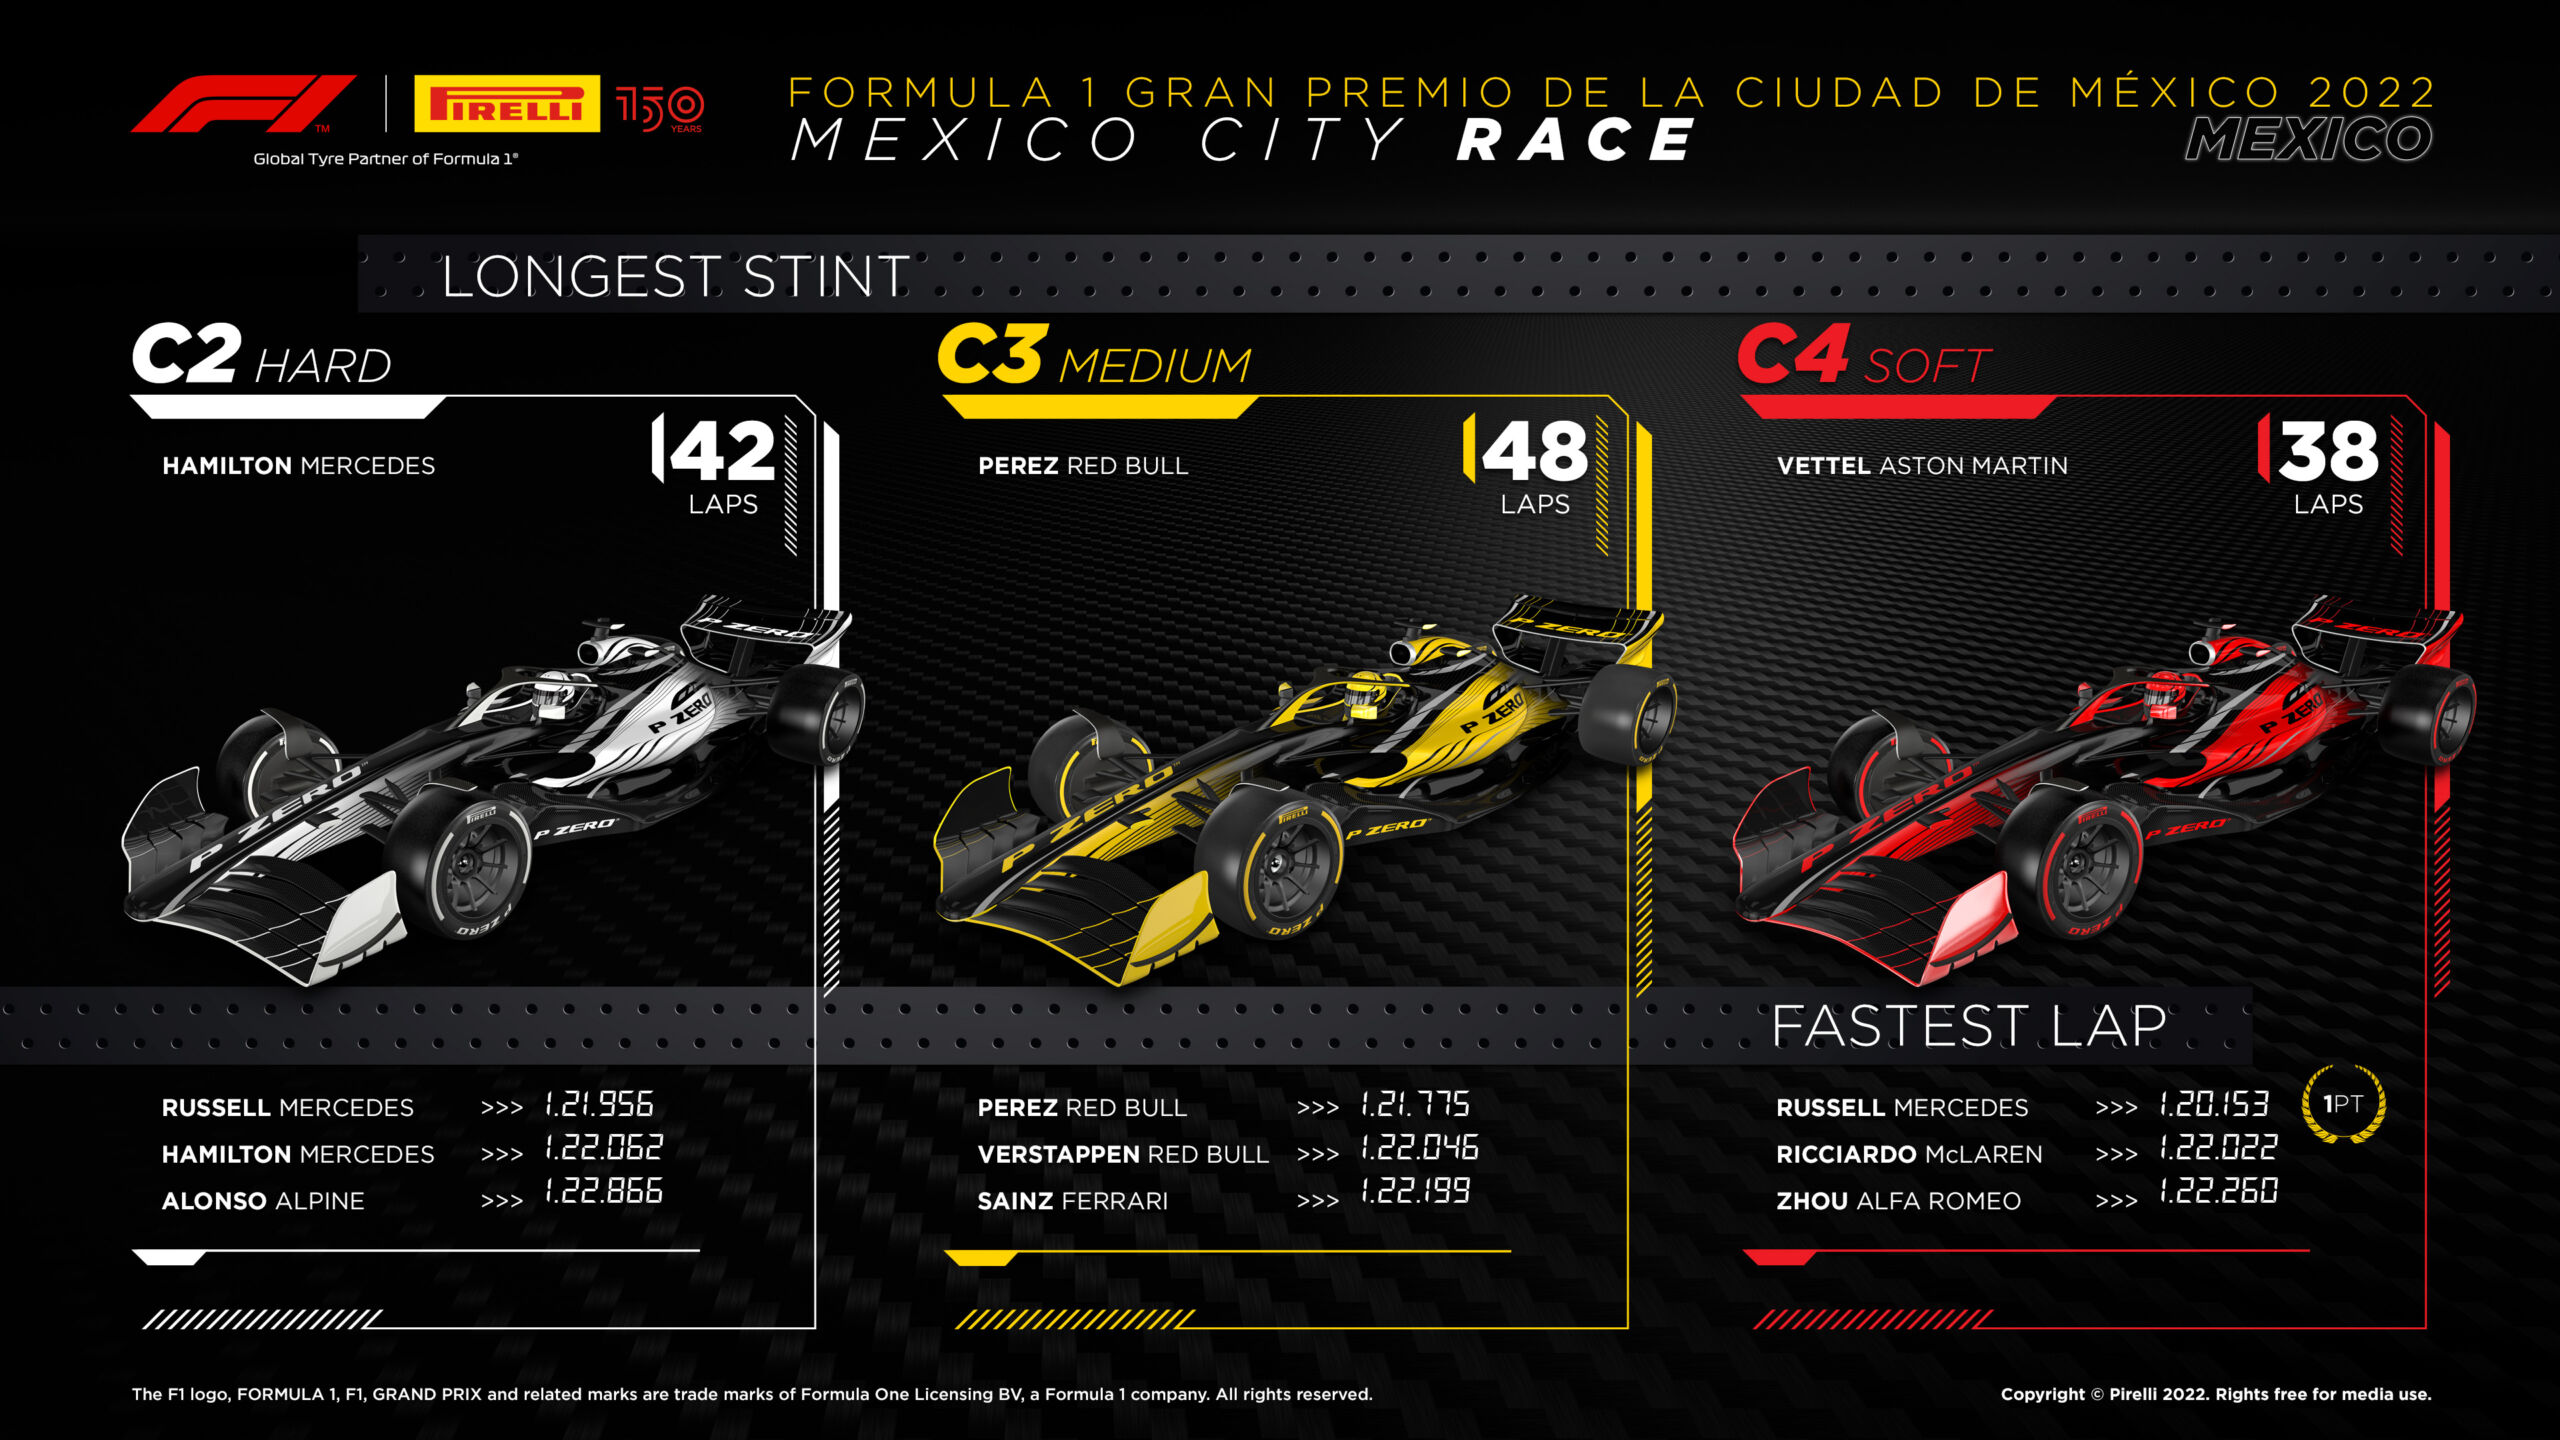 2022 Mexico Grand Prix Tyre Performance Analysis - Longest Stint